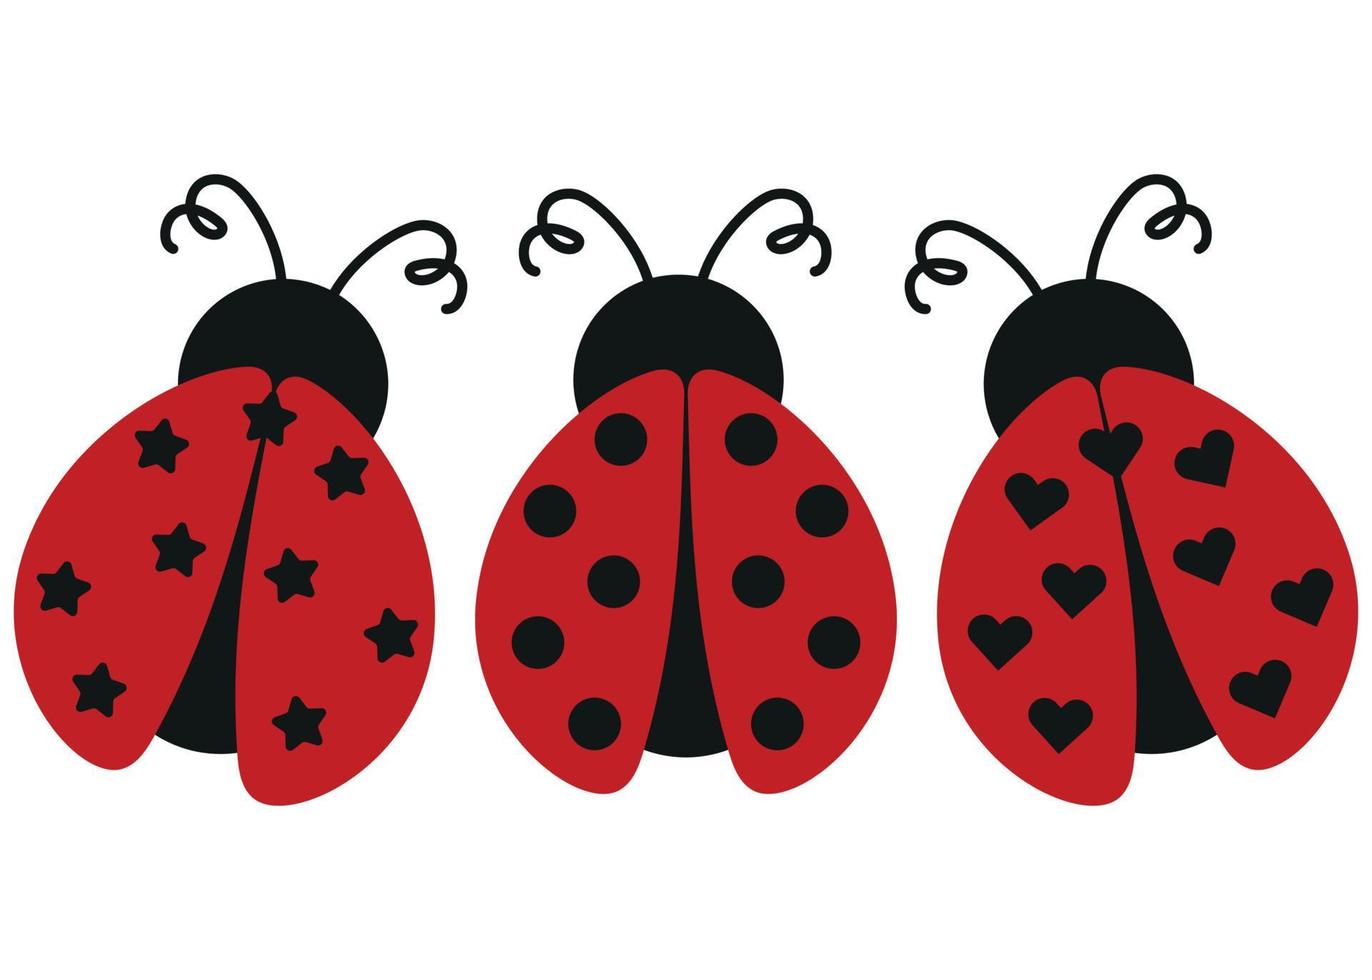 ladybug cartoon set. insect cute illustration isolated on white background vector